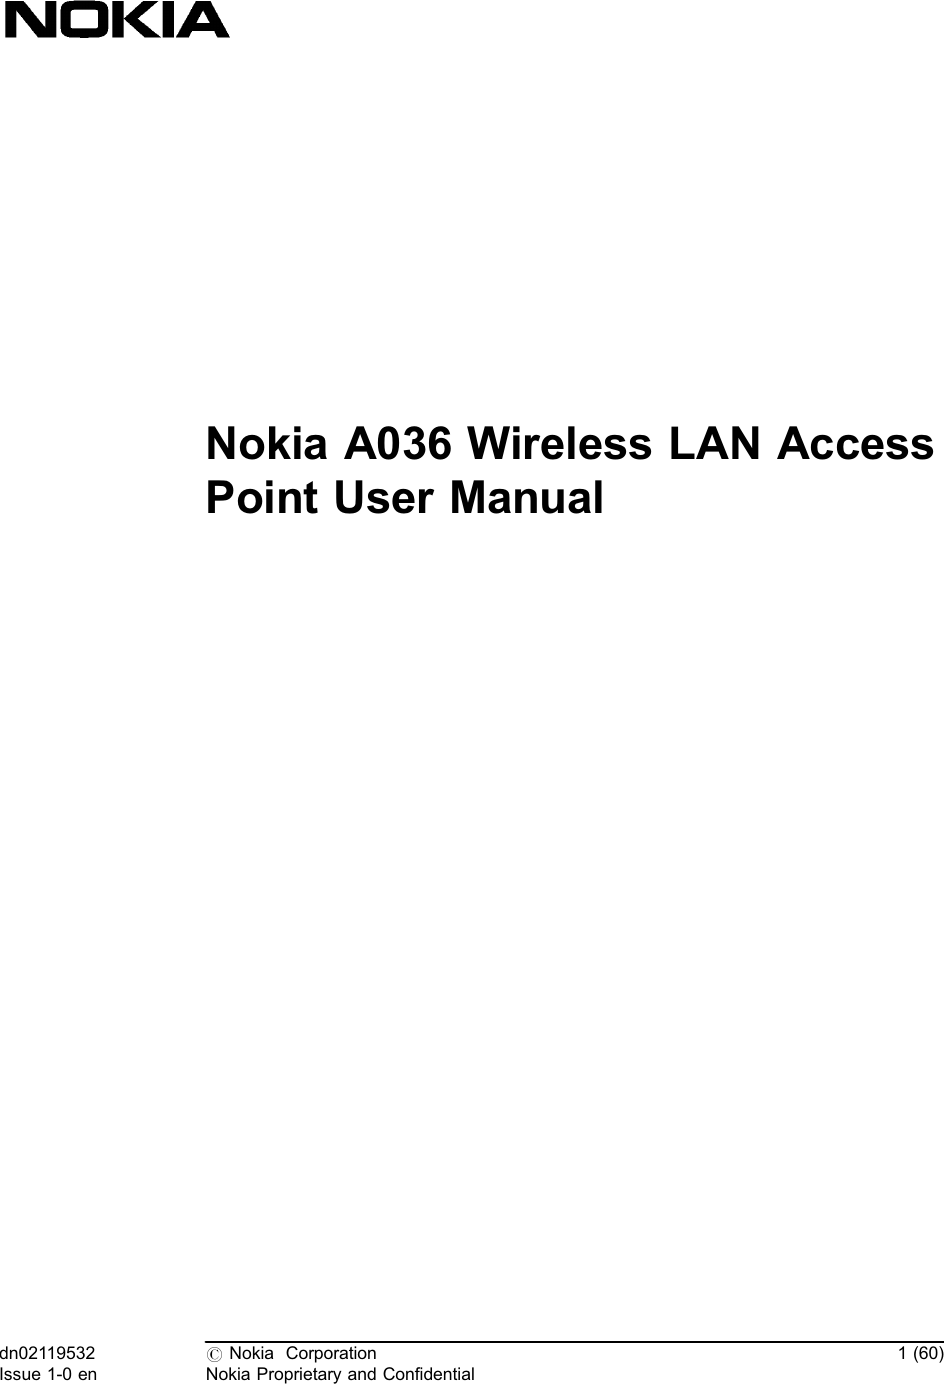 Nokia A036 Wireless LAN AccessPoint User Manualdn02119532Issue 1-0 en#Nokia CorporationNokia Proprietary and Confidential1 (60)